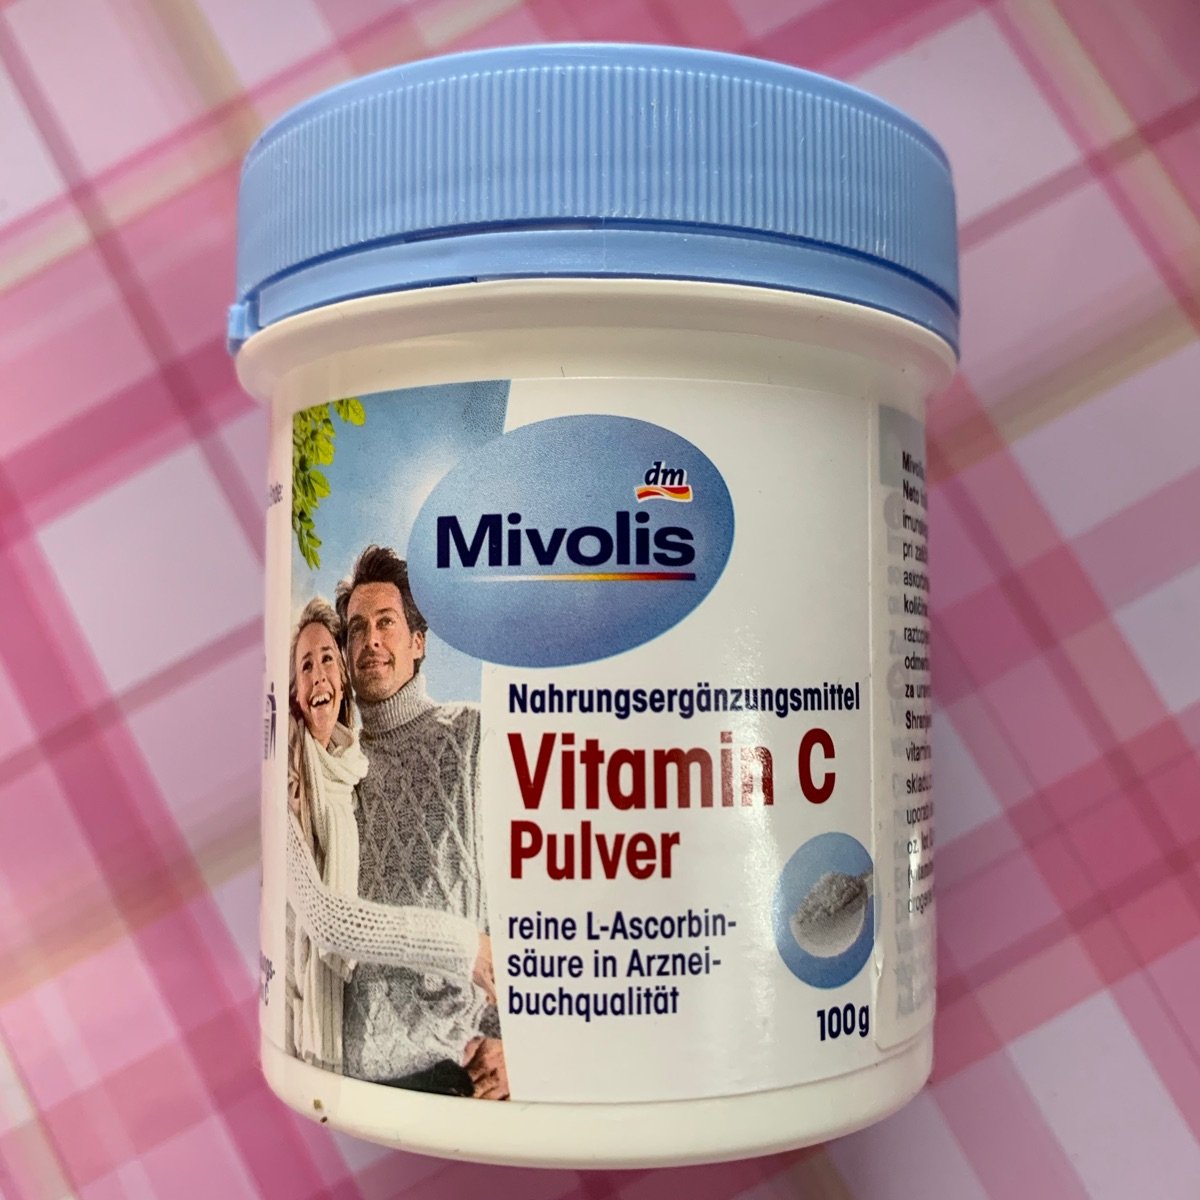 Mivolis Vitamin C Pulver Review | abillion